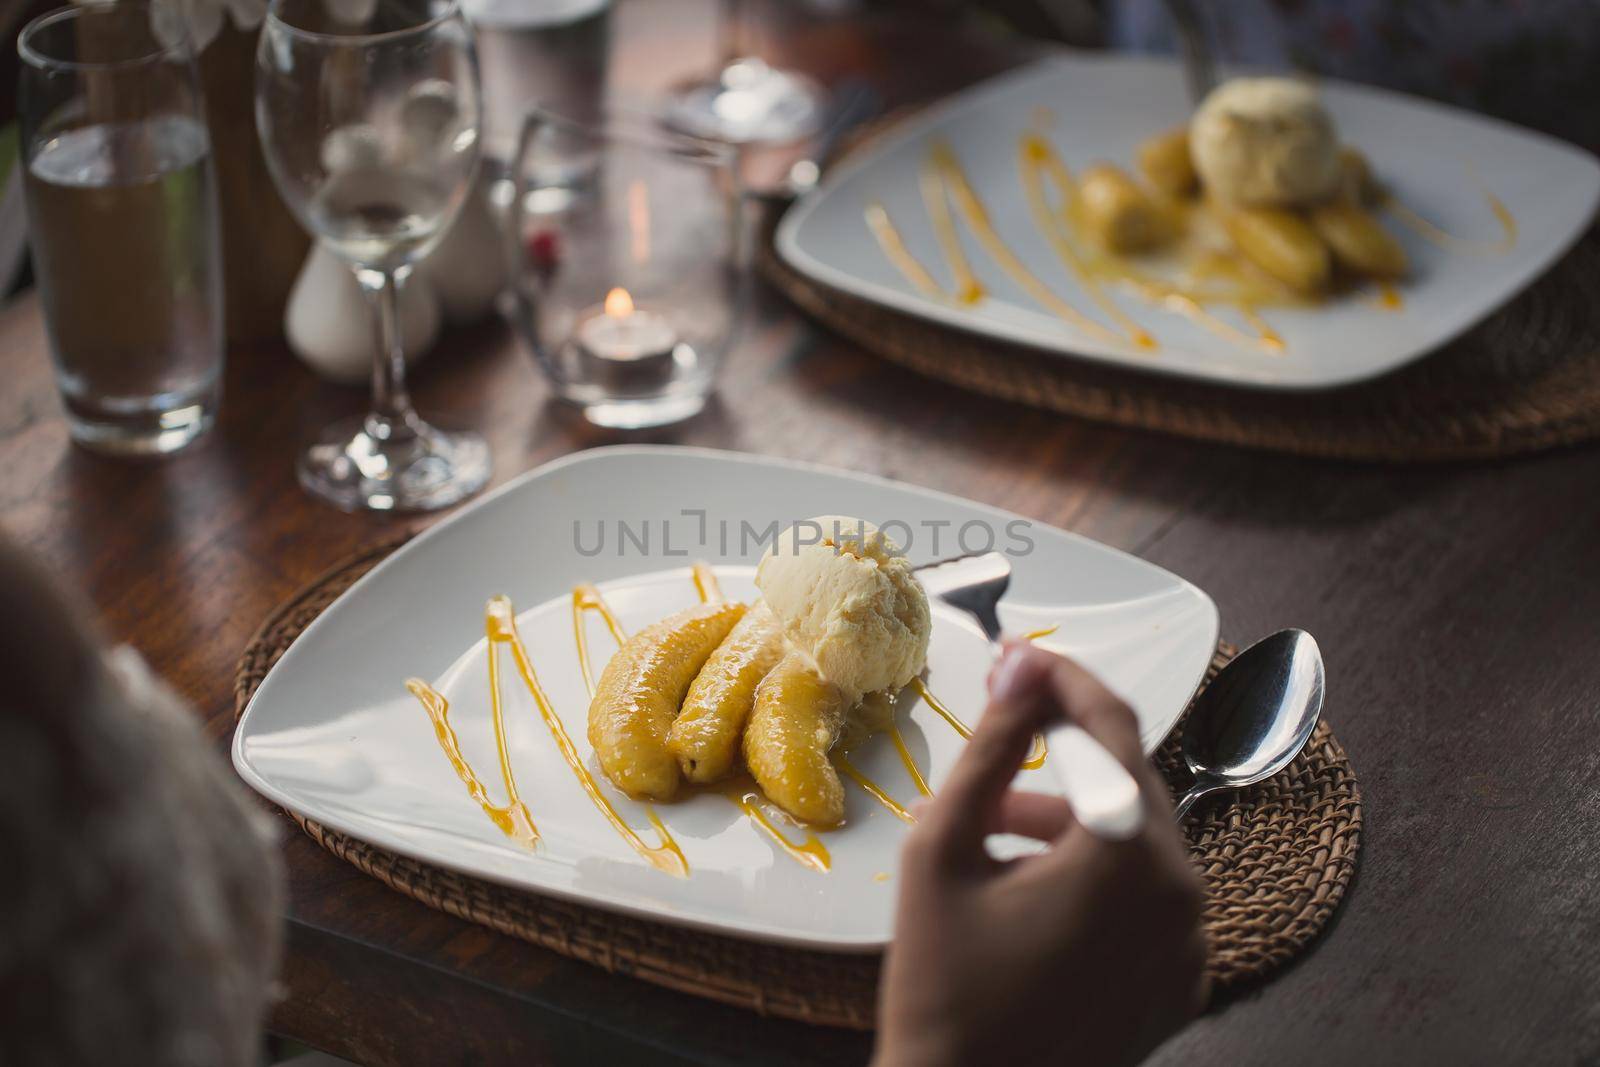 Fried banana and ice cream on a plate.